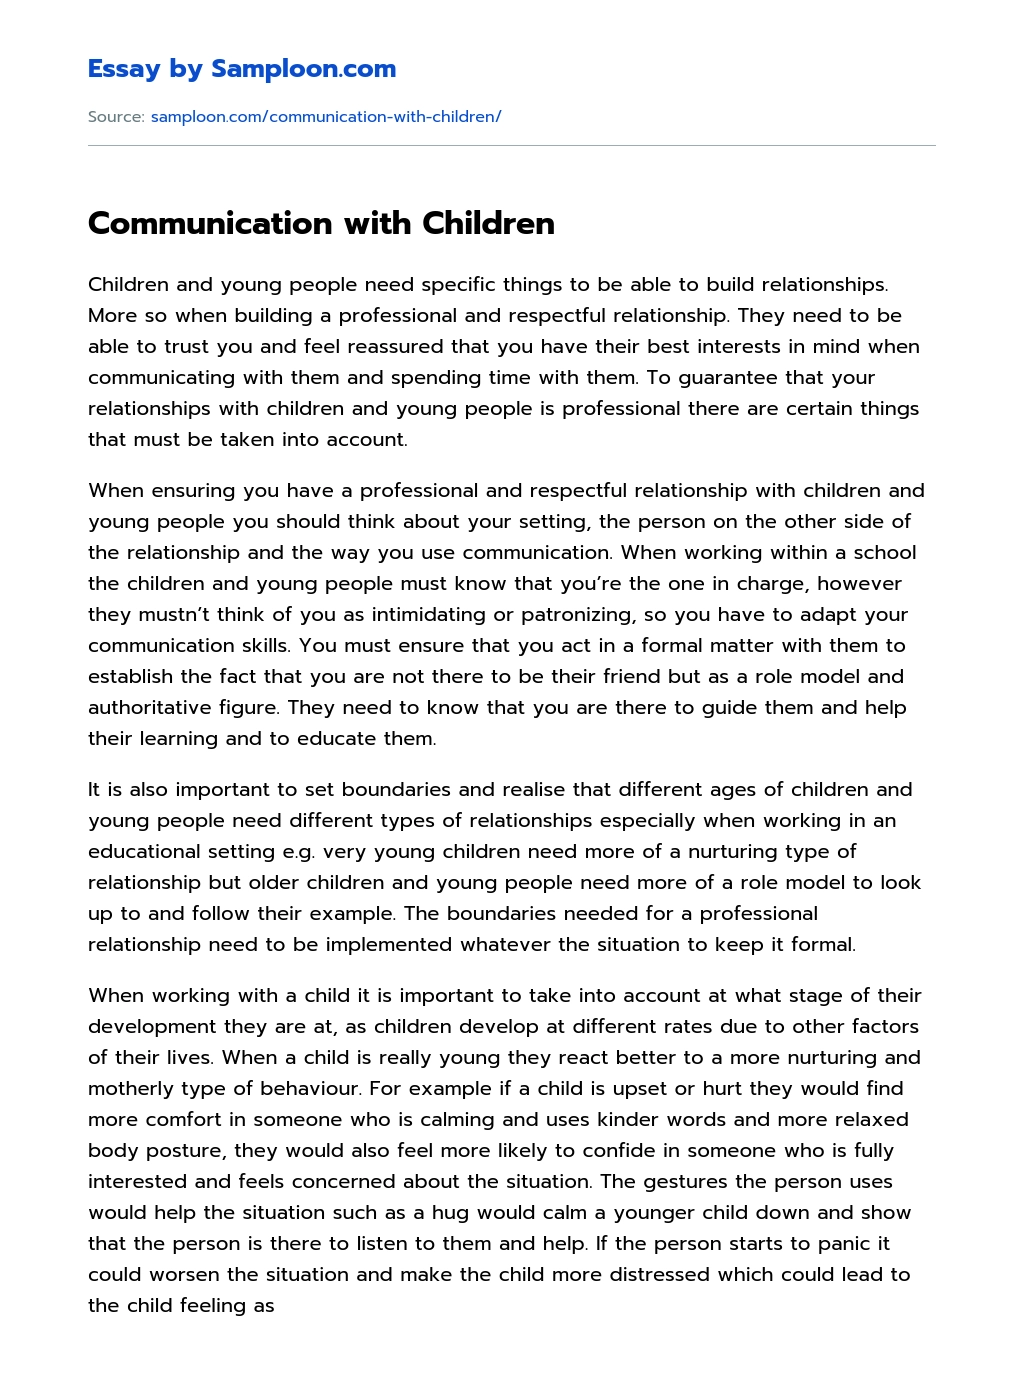 Communication with Children essay